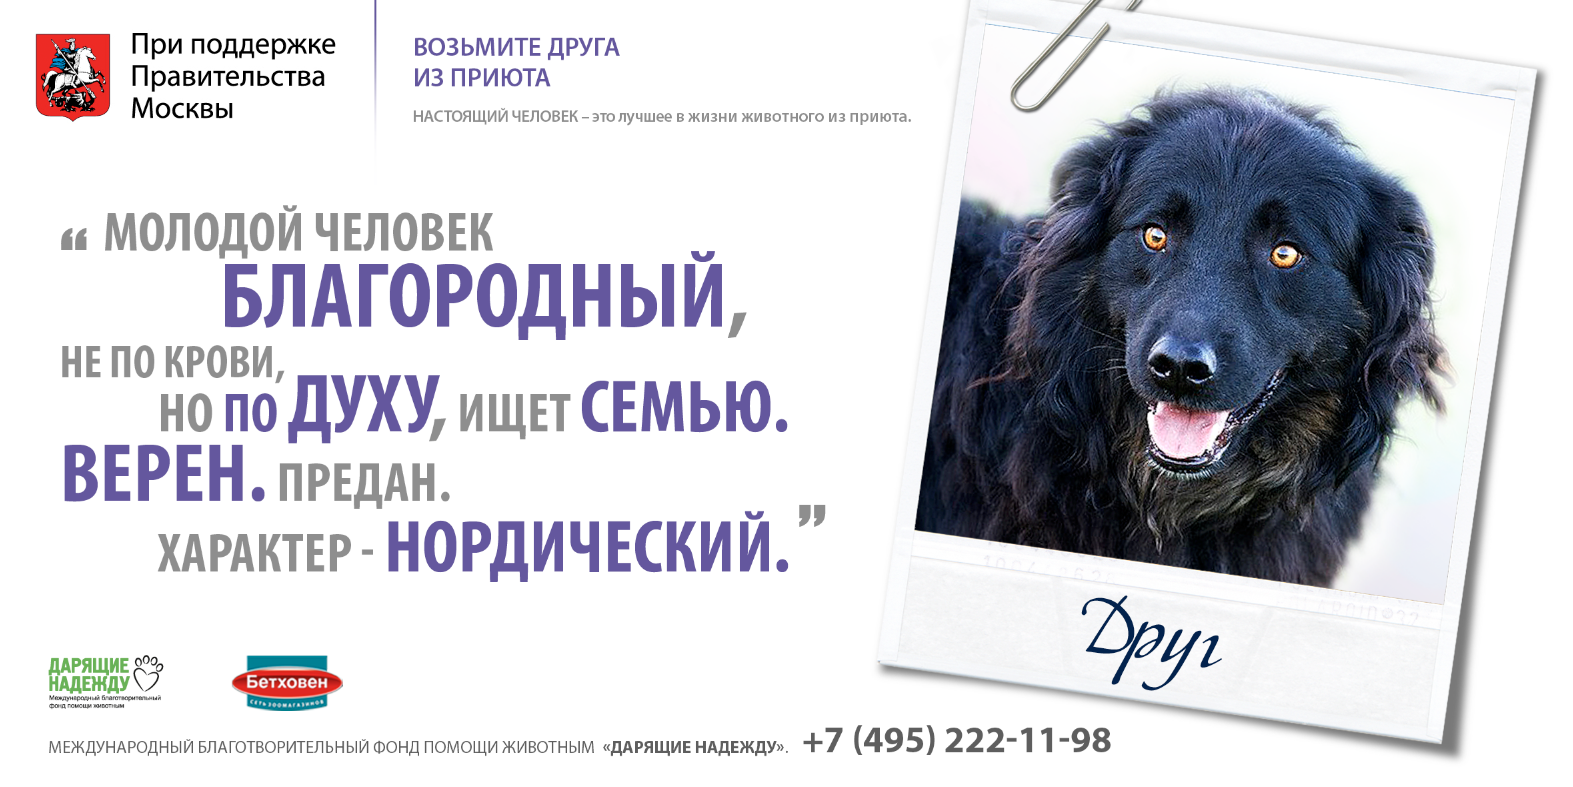 Реклама приюта для животных. Социальная реклама приюта для животных. Реклама приюта для собак. Реклама приюта для бездомных животных. Слоган животное